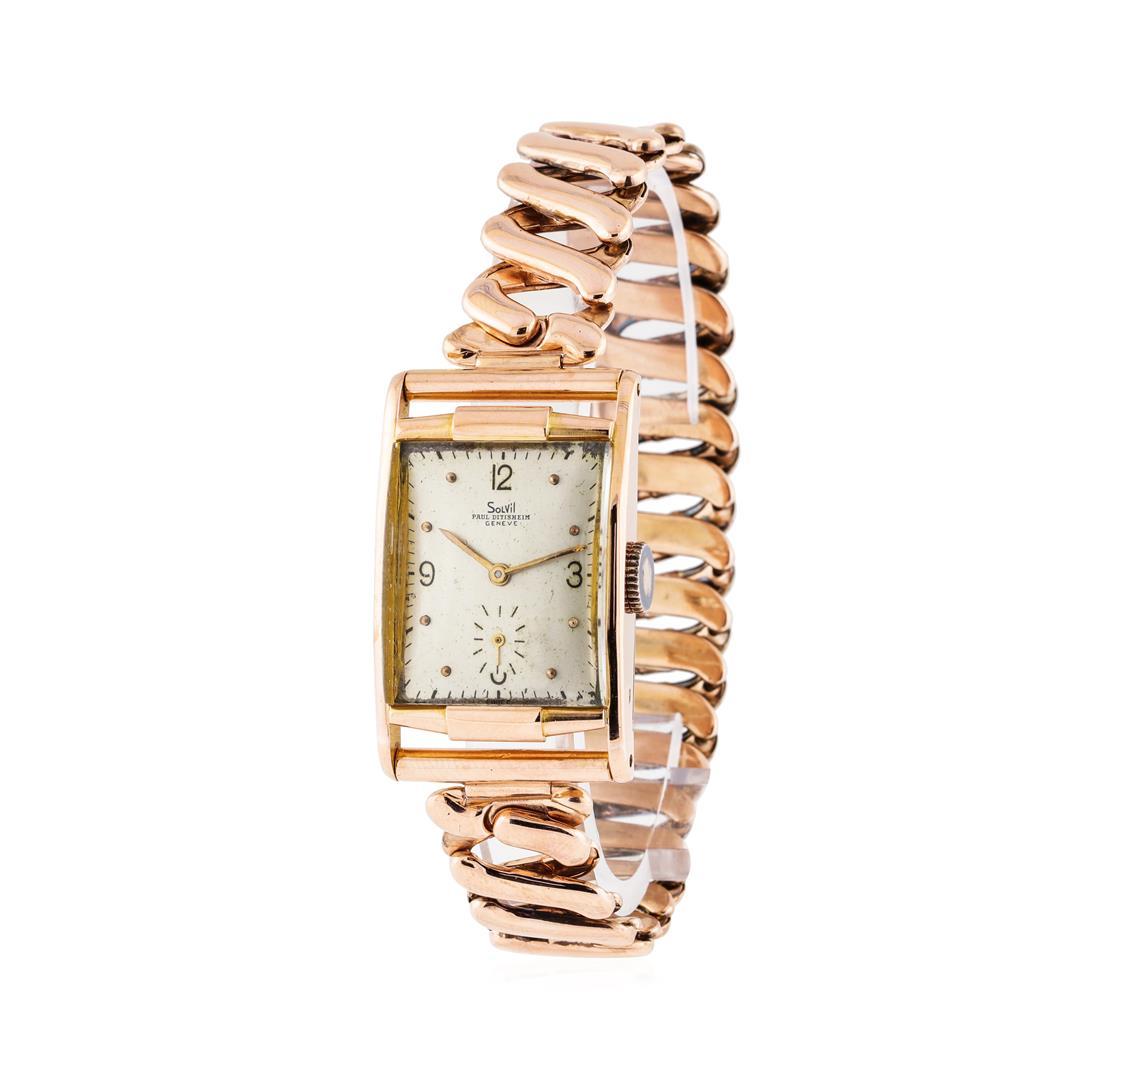 Solvil Paul Ditisheim Wrist Watch - 14KT Rose Gold